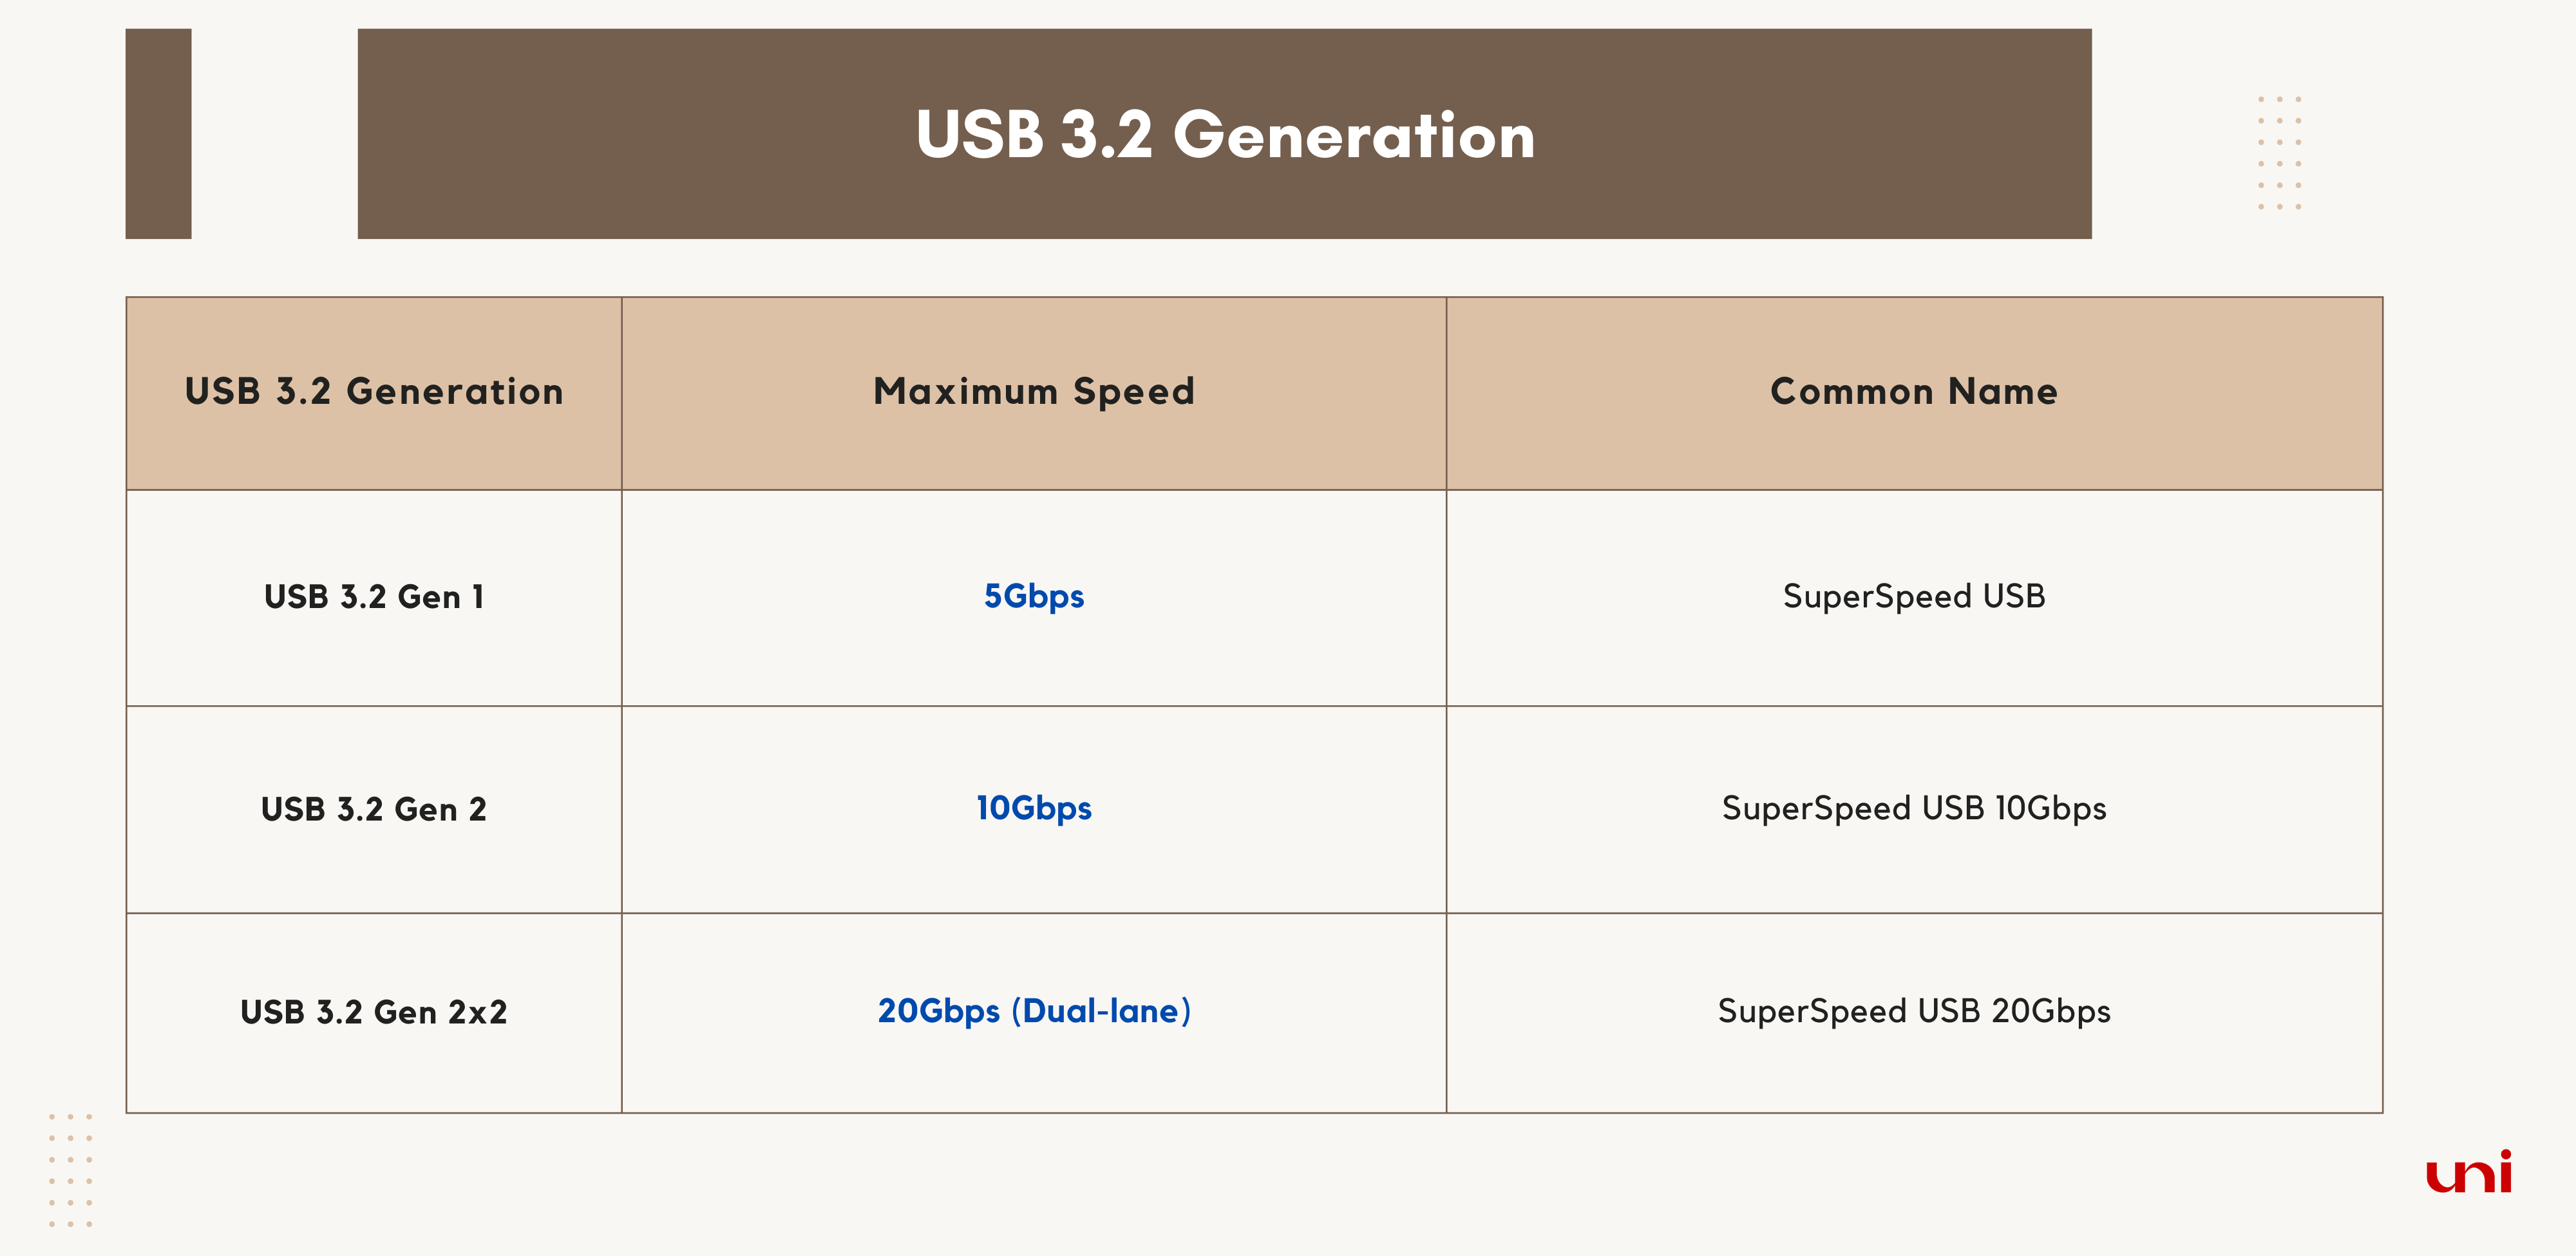 USB 3.2 Generation